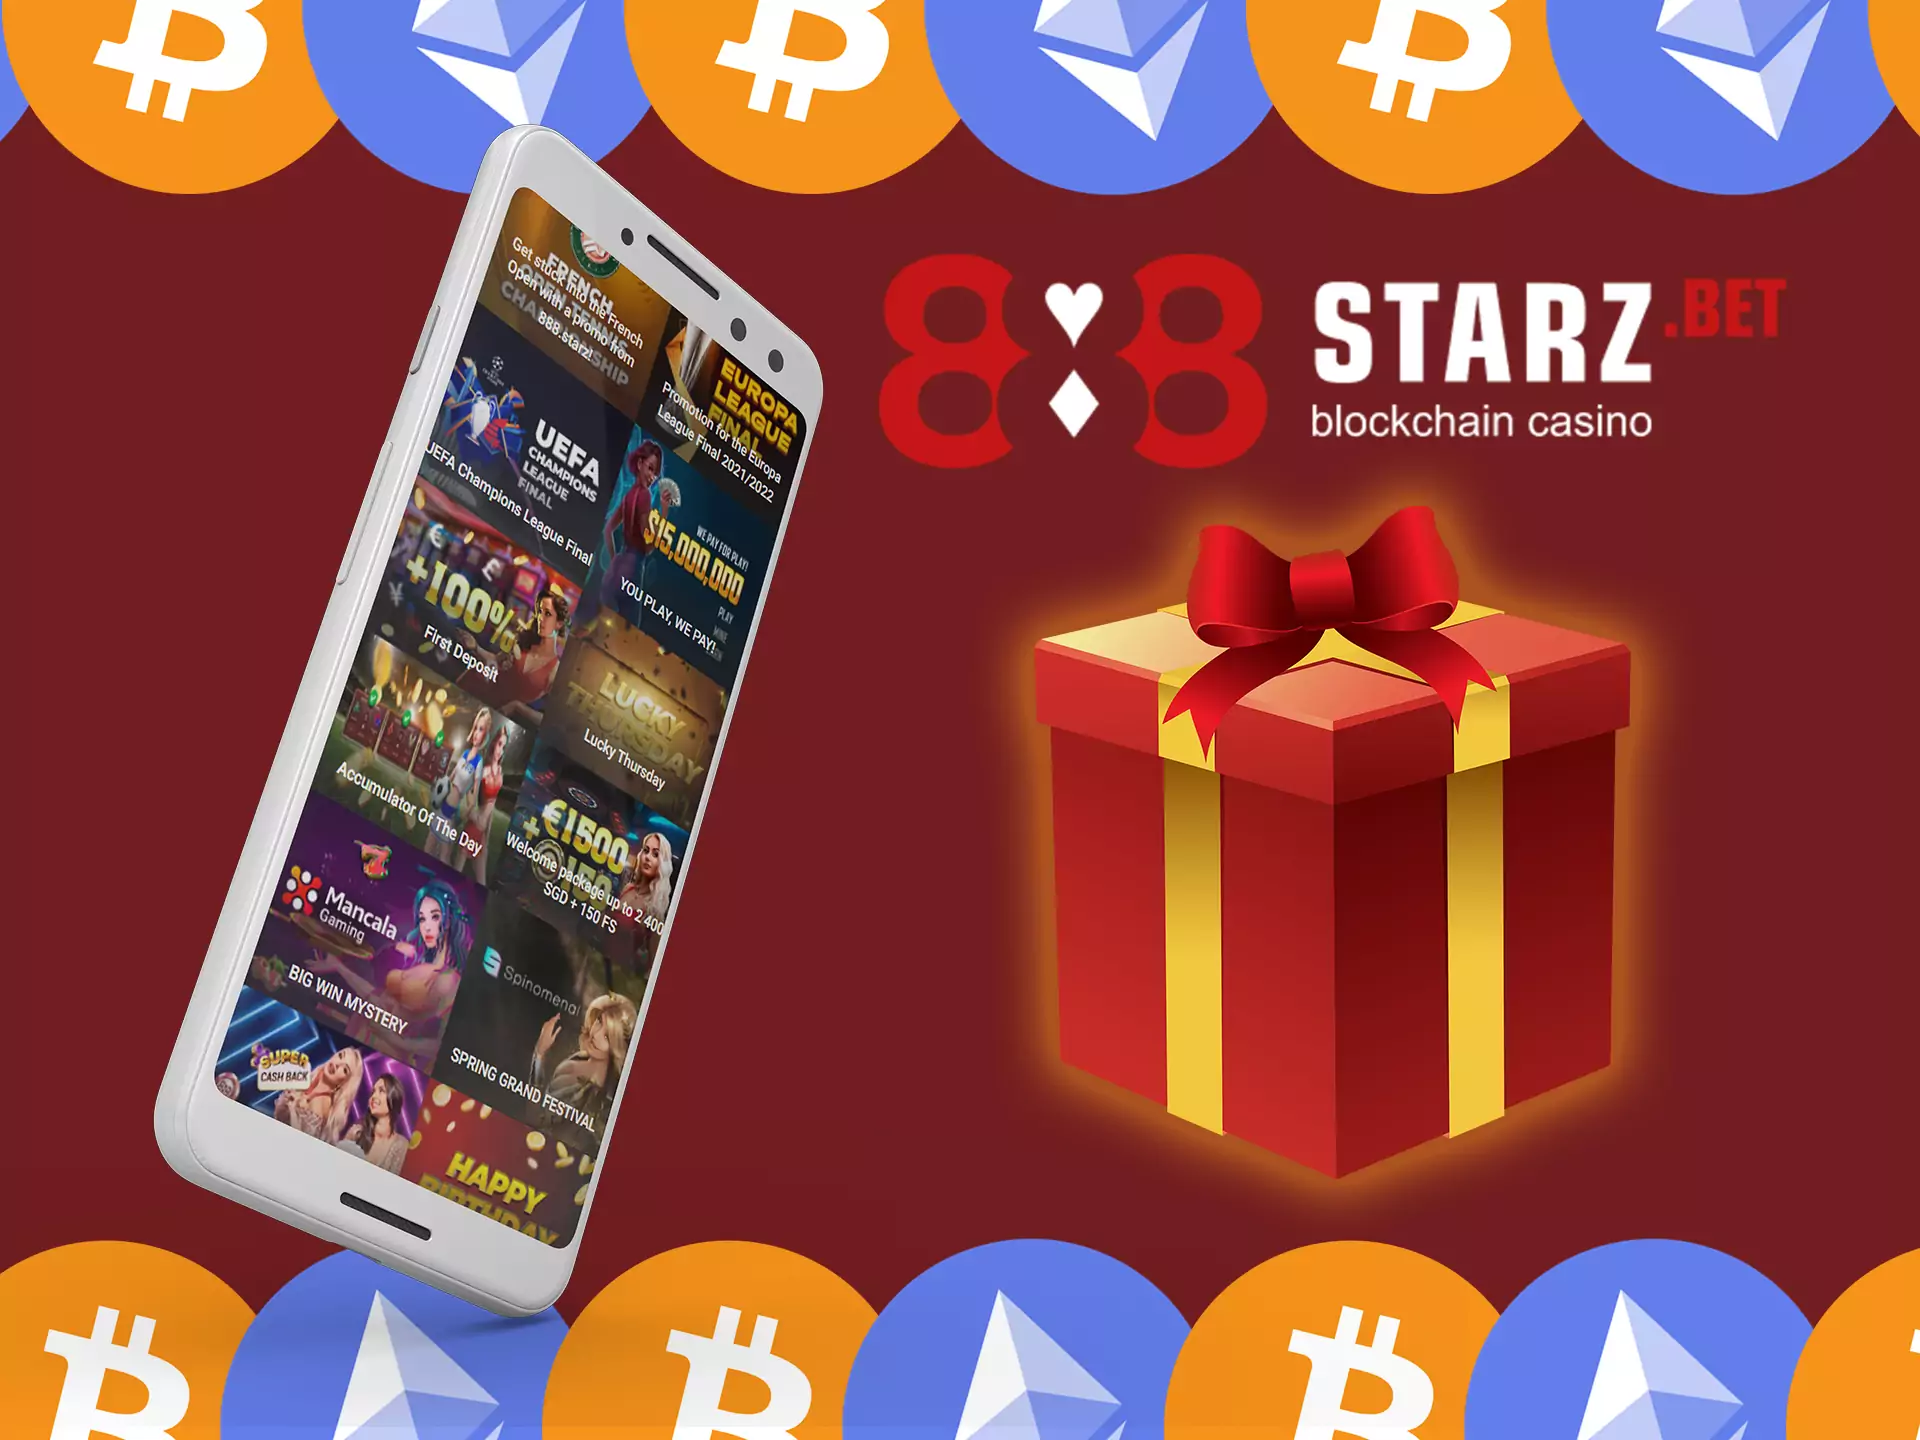 Get you free bonuses after deposit from 888starz app.